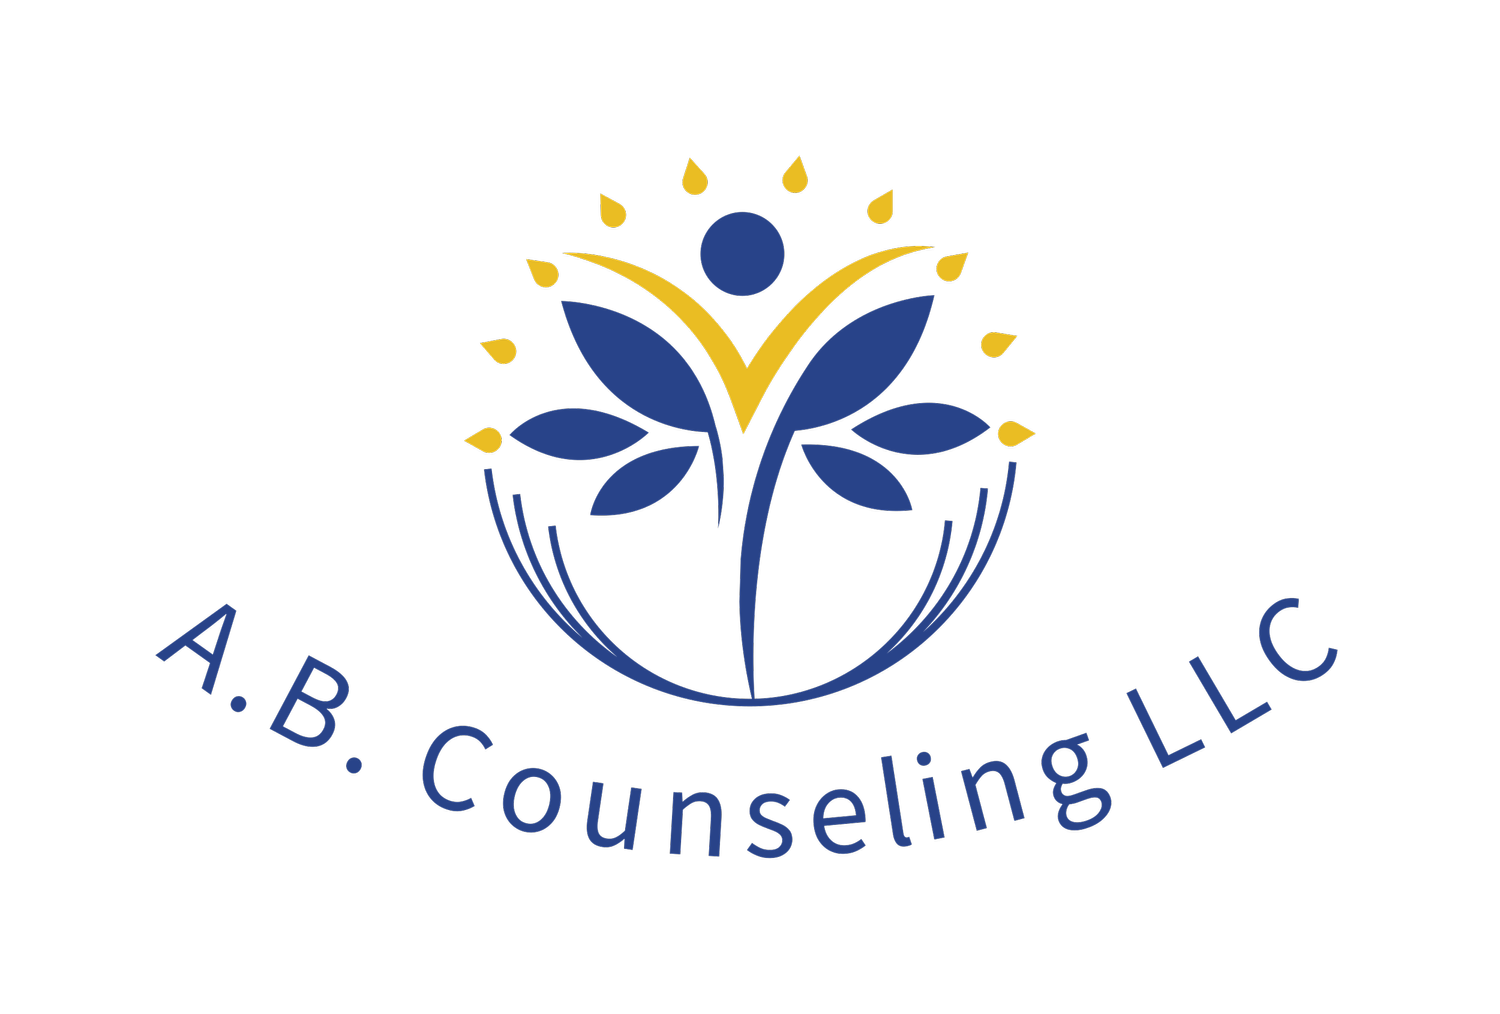 AB Counseling, LLC